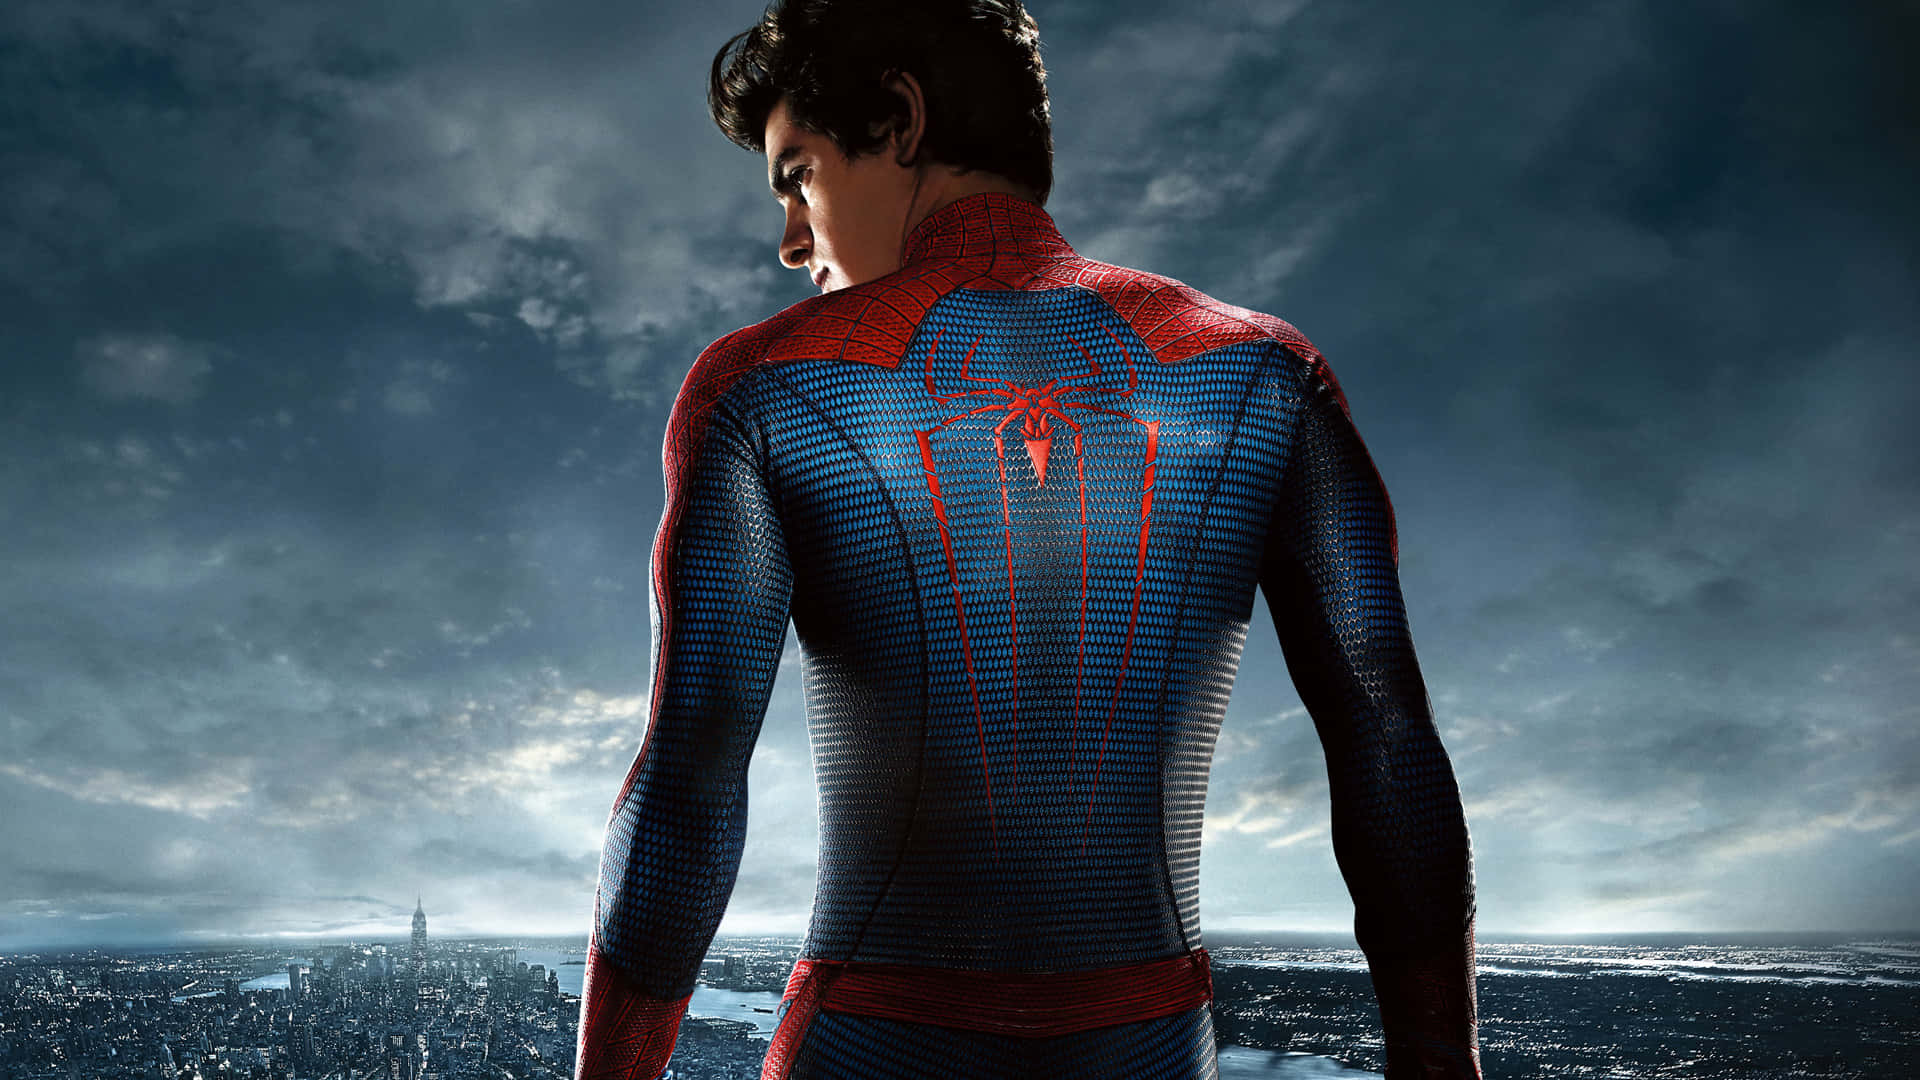 Andrew Garfield as Spiderman Wallpaper